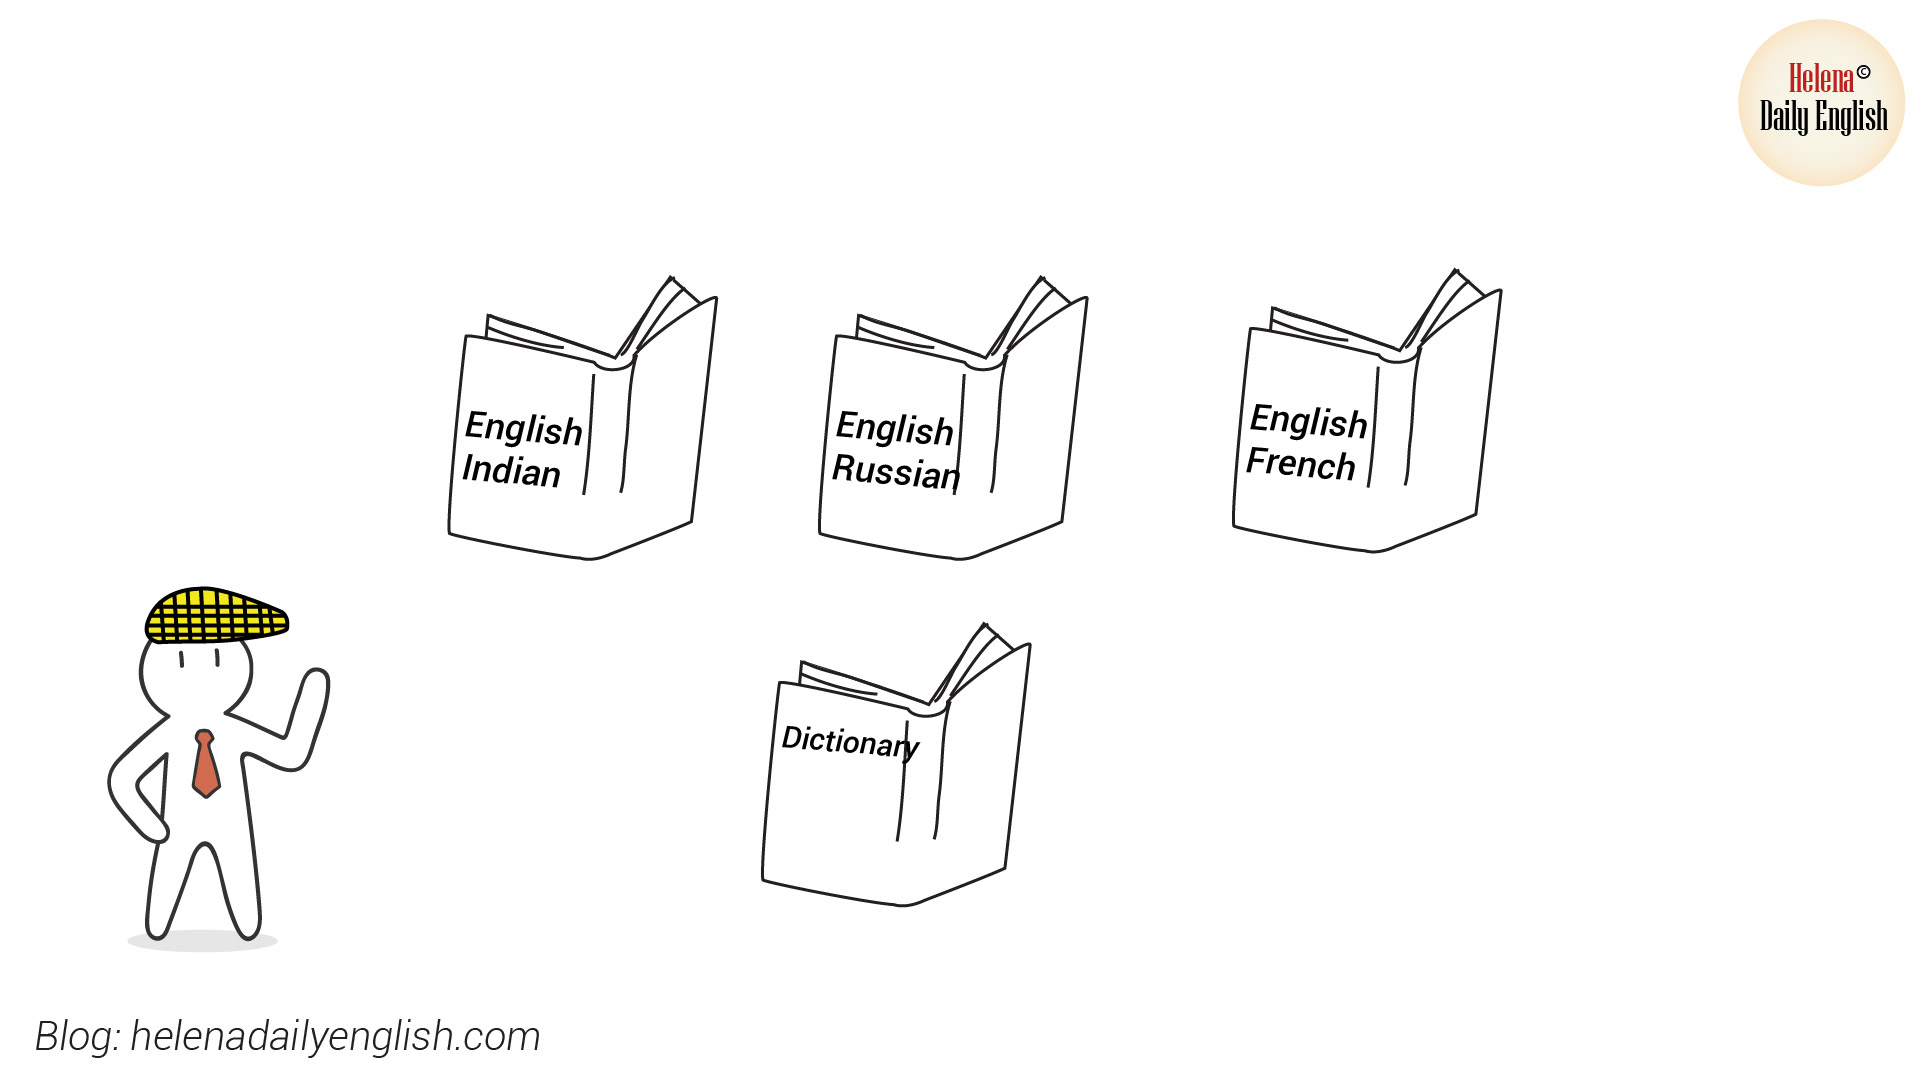 How to improve English Reading skills